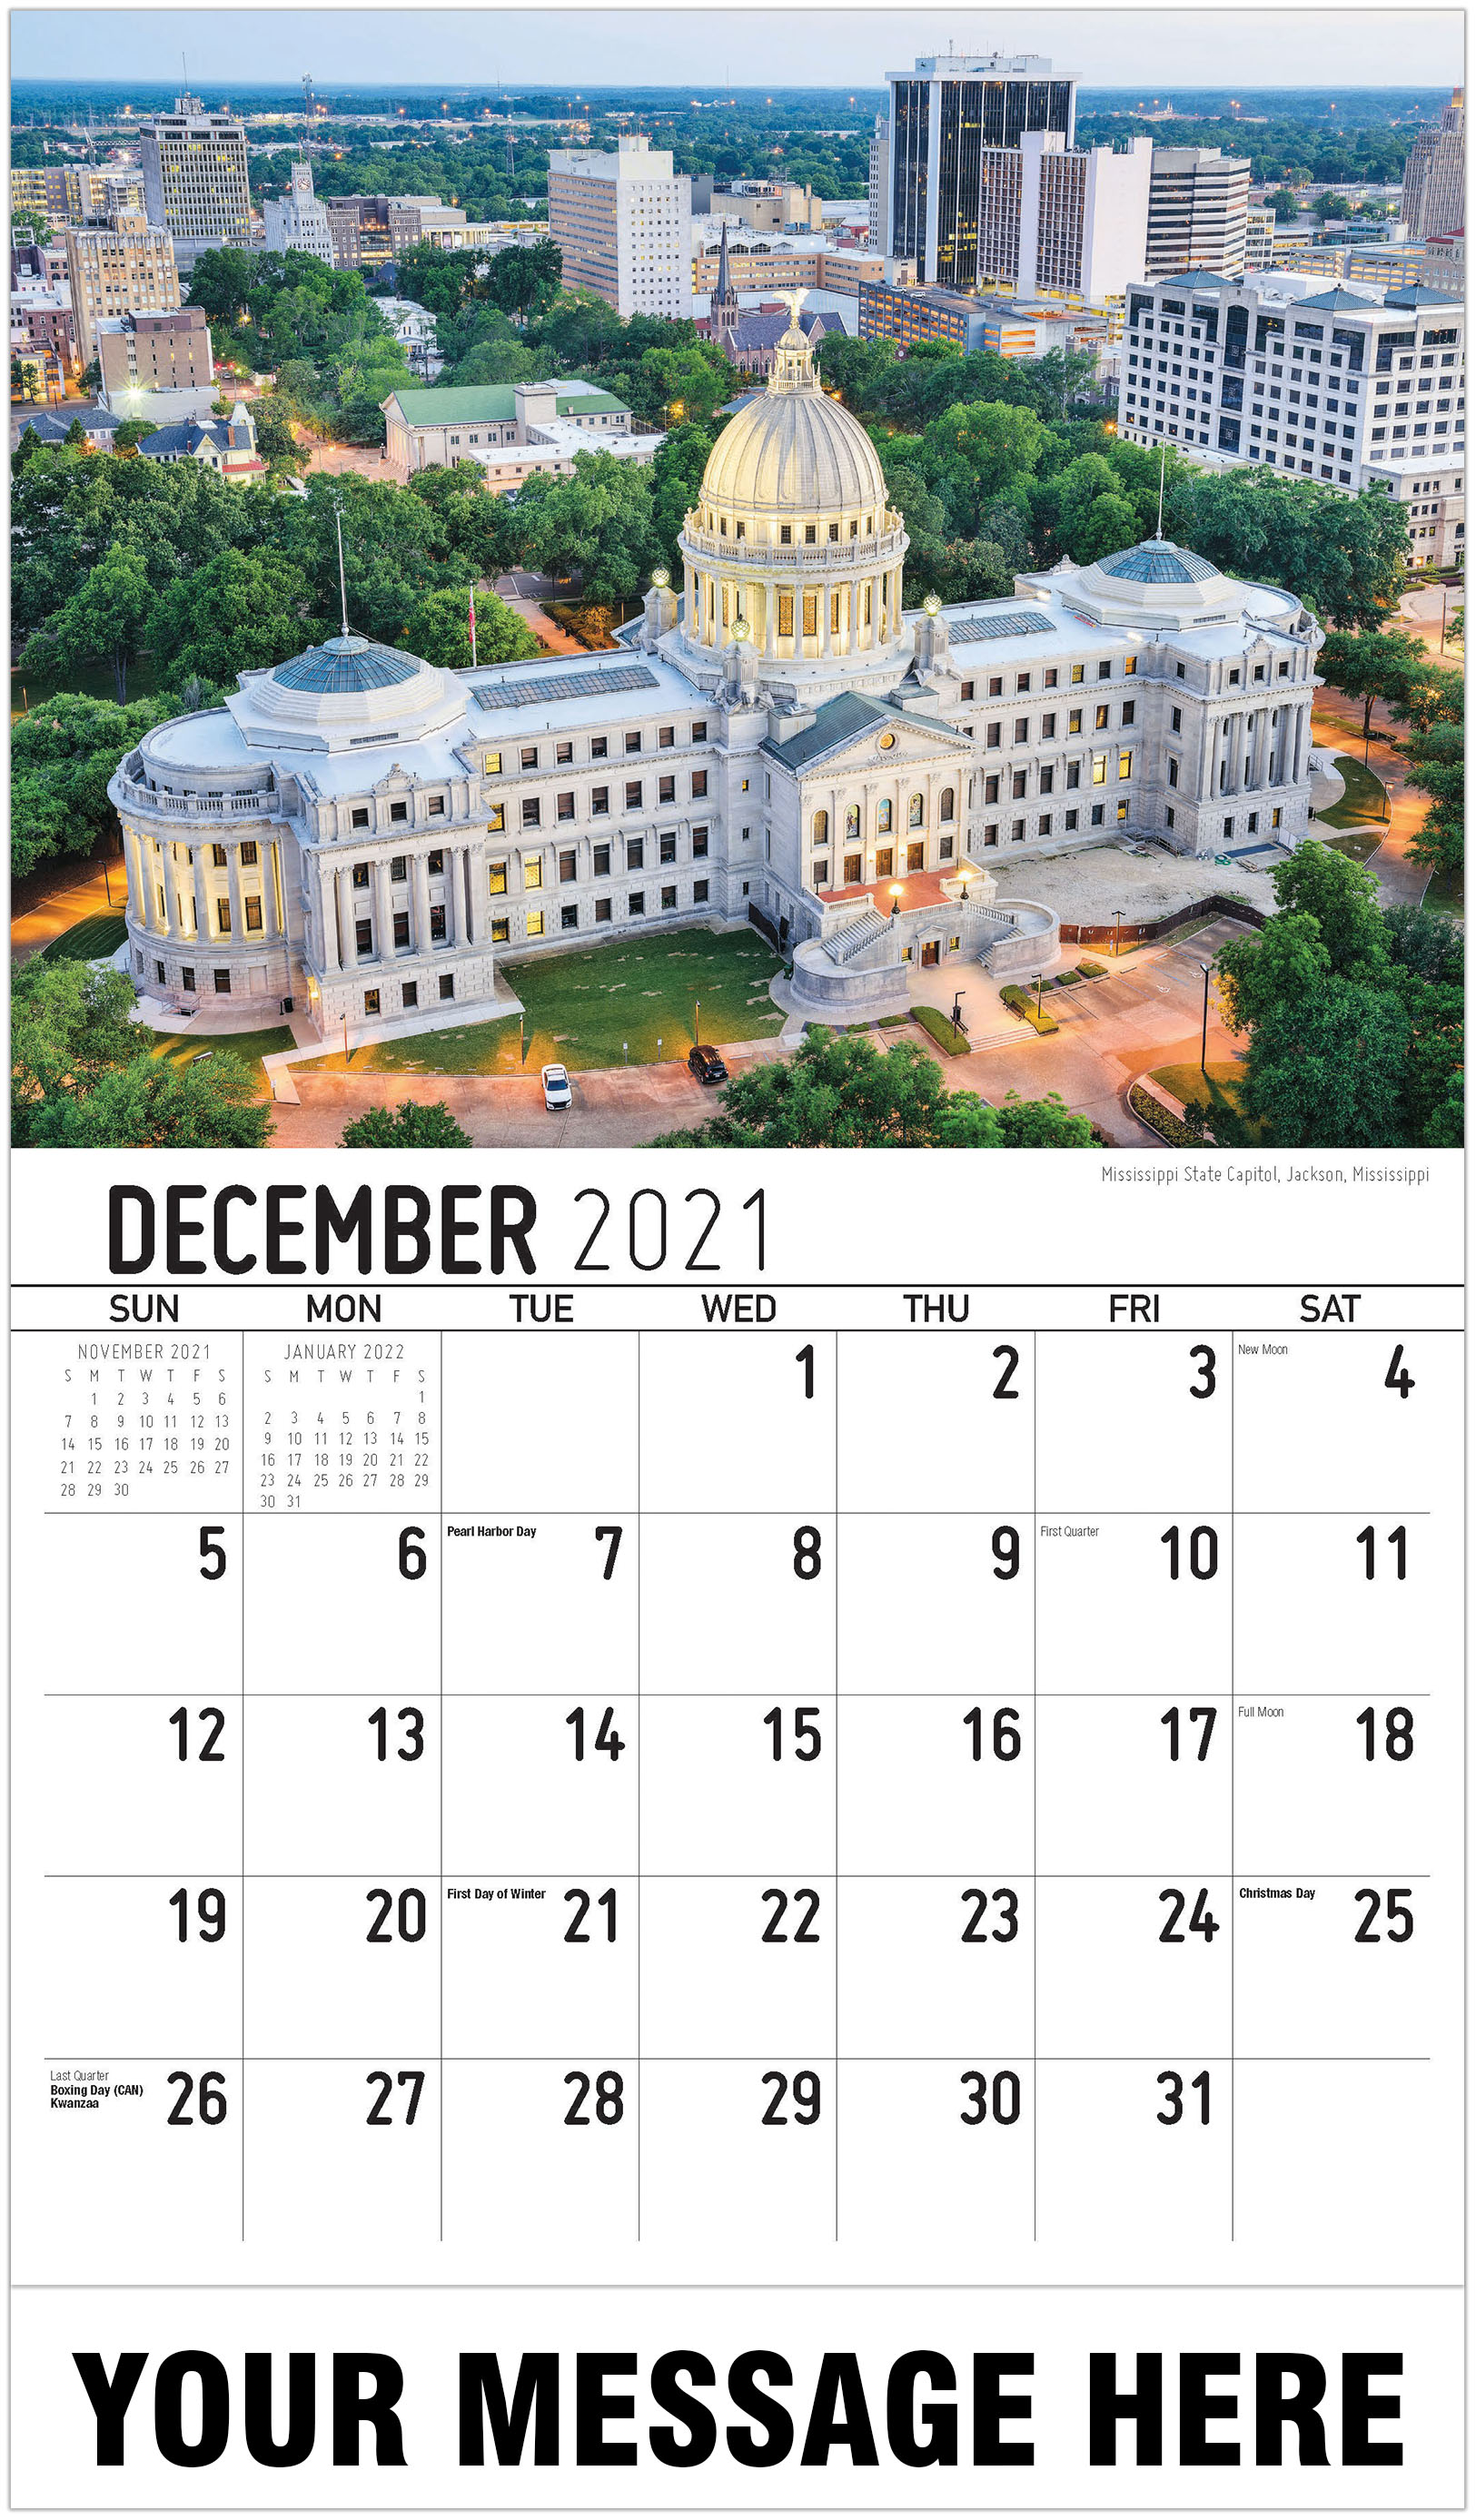 mississippi-state-calendar-printable-calendar-blank